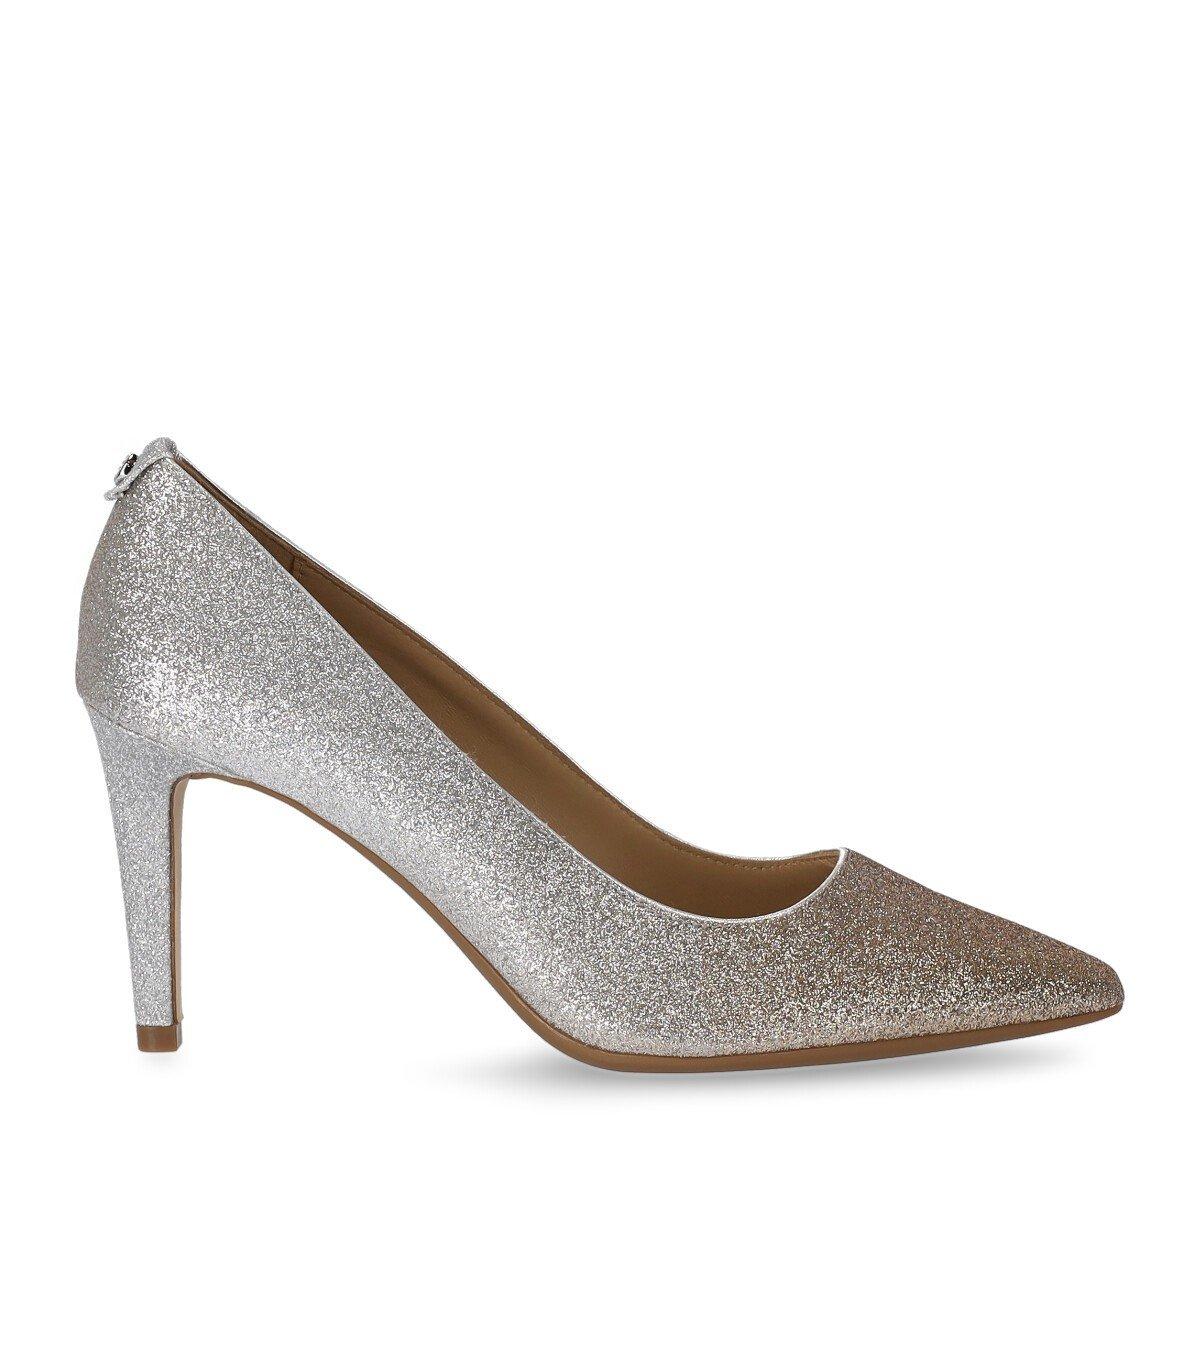 Michael Kors  Shoes  Michael Kors Silver Glitter Heels Size 8  Poshmark